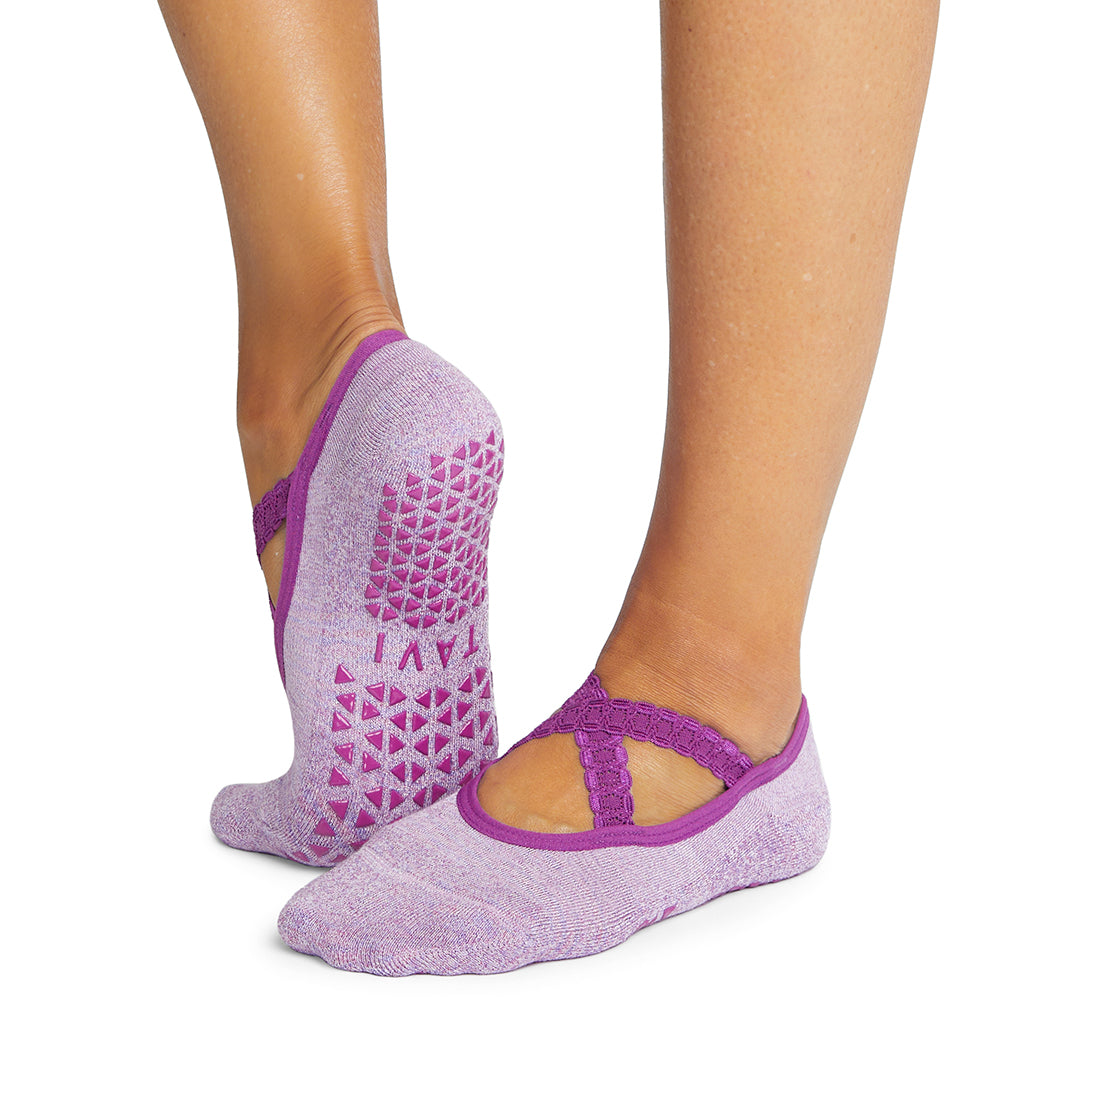 Tavi Noir Chloe Grip Socks - T8 Fitness - Asia Yoga, Pilates, Rehab,  Fitness Products